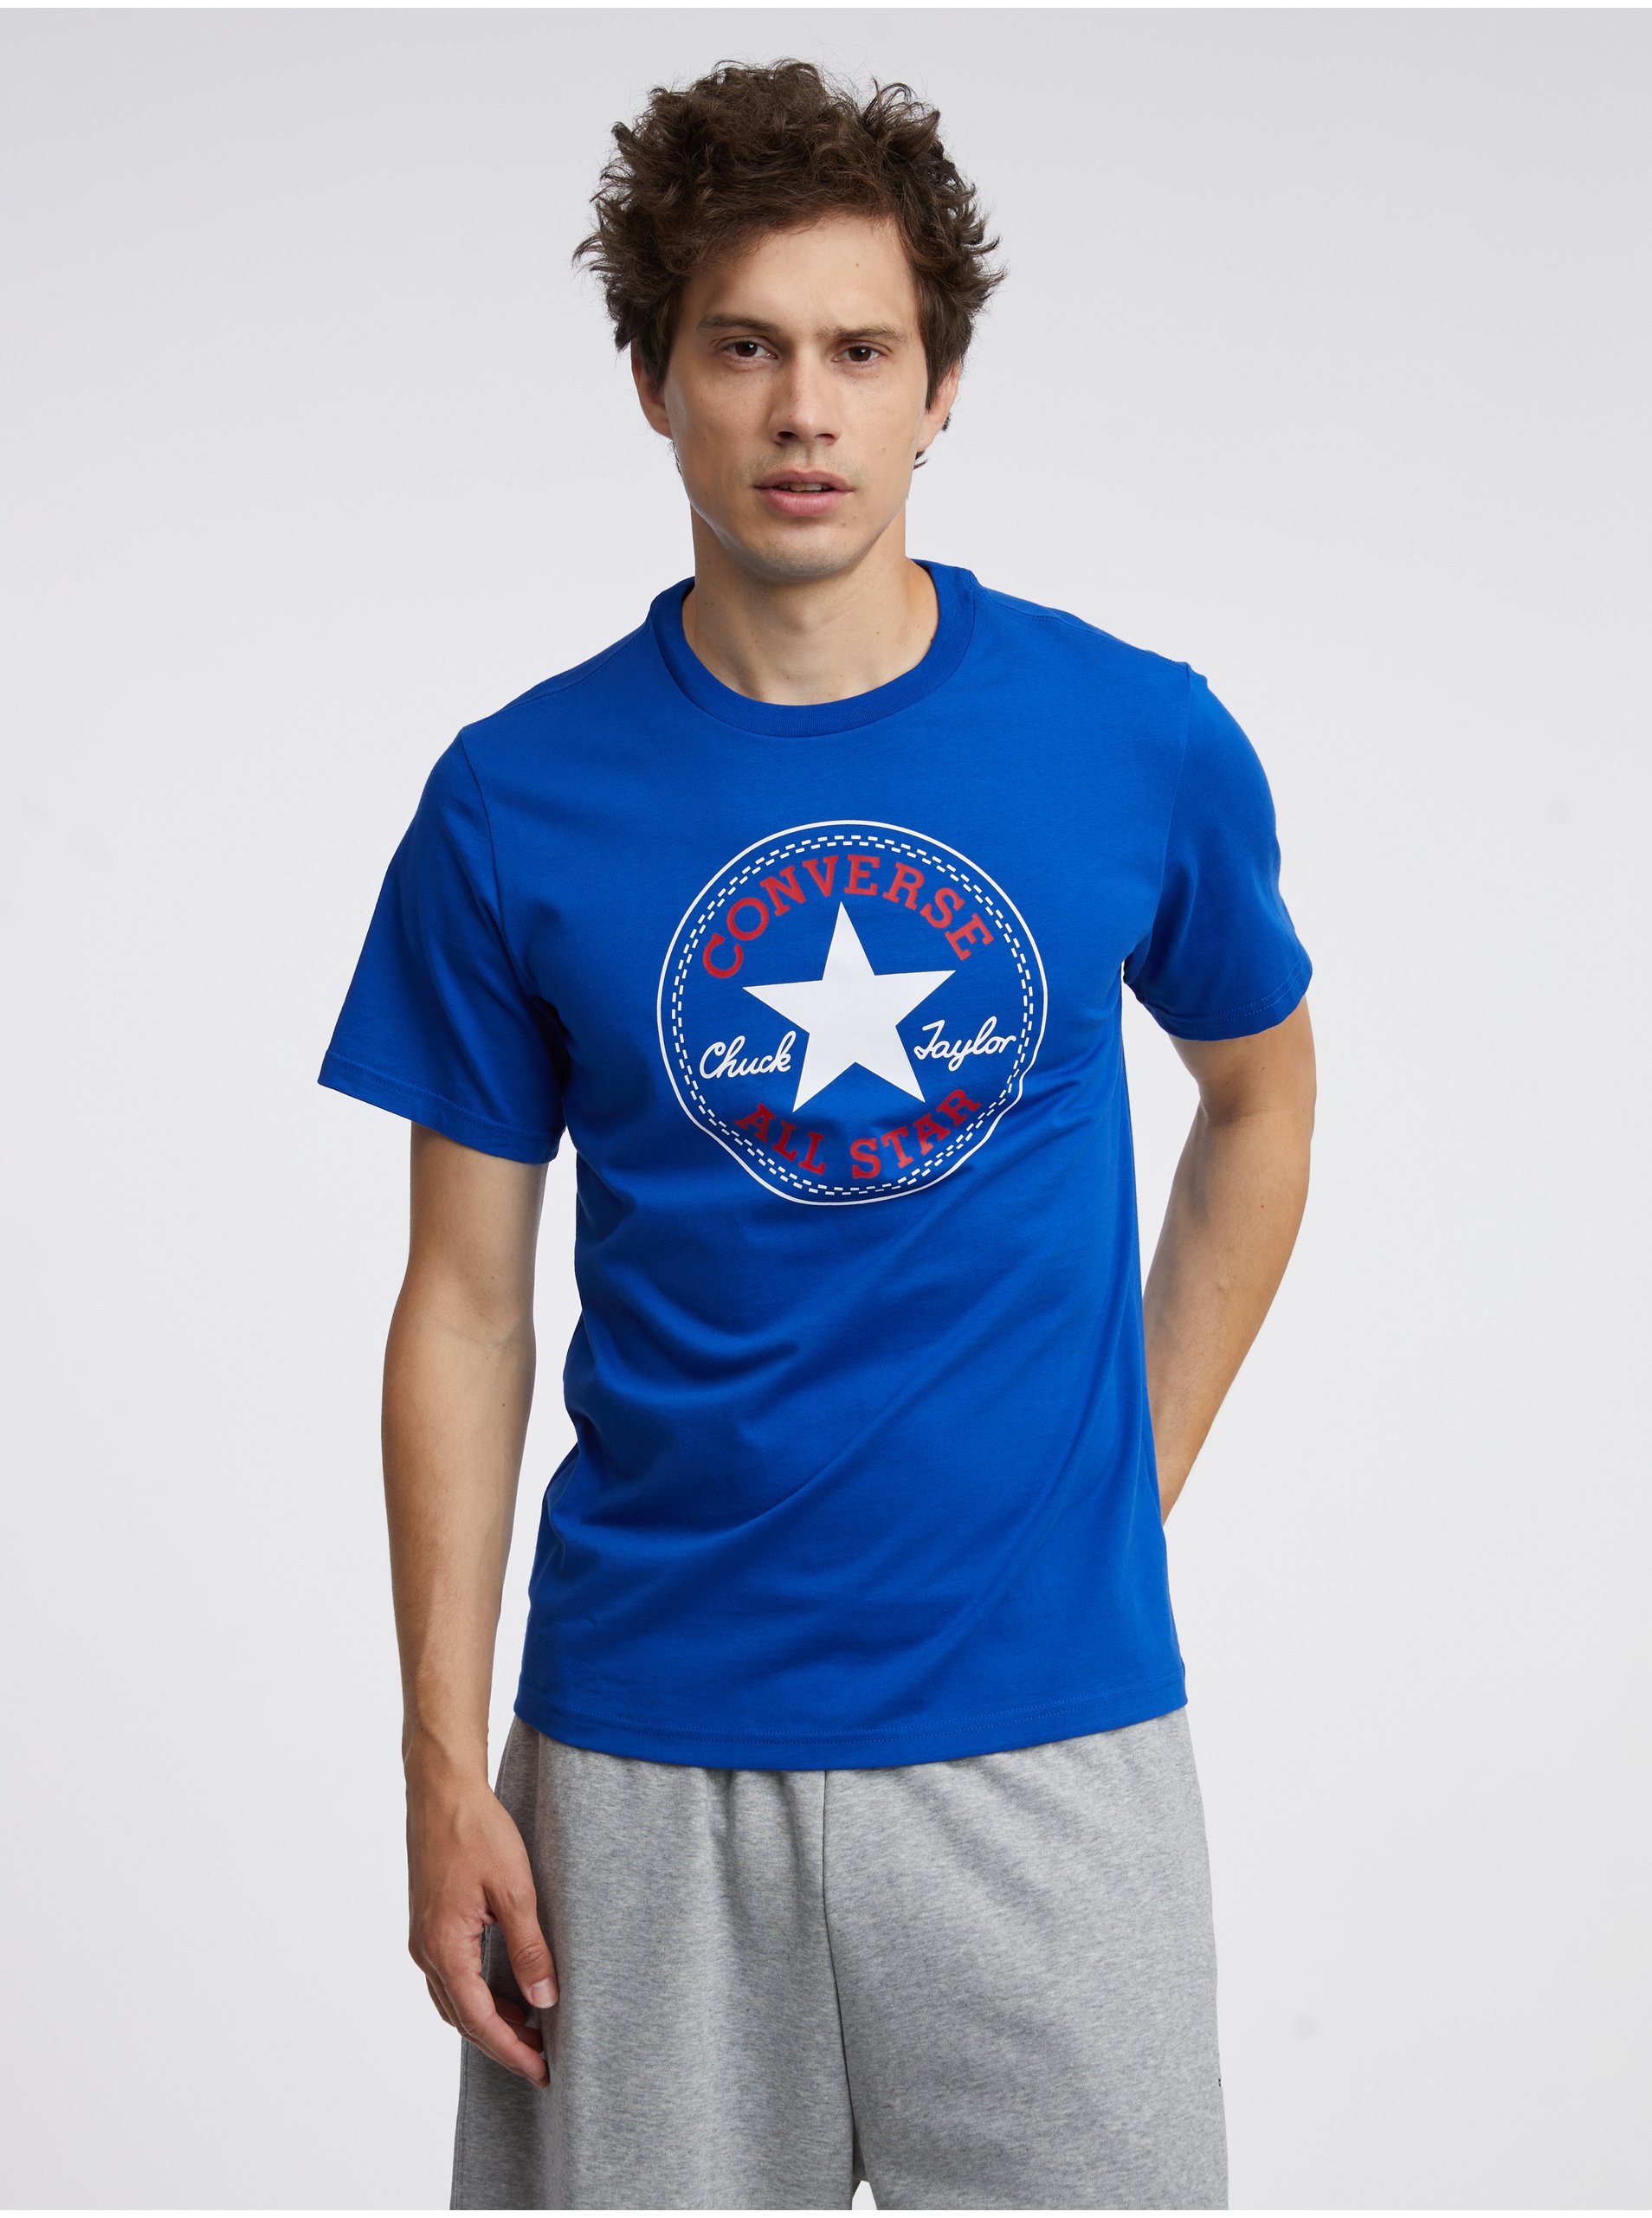 Lacno Modré unisex tričko Converse